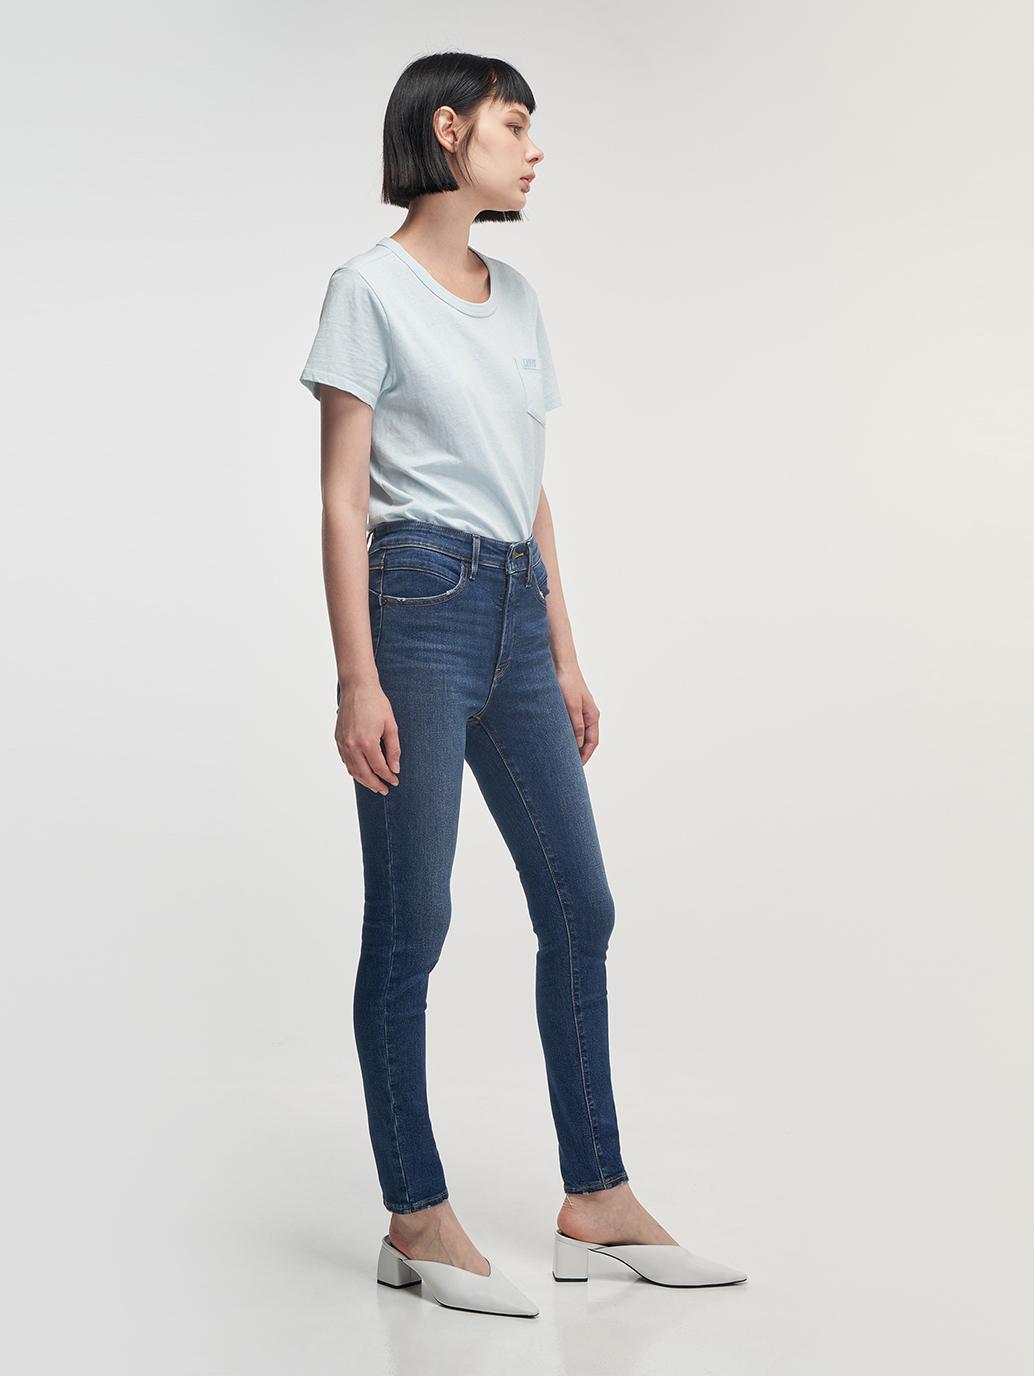 Levi's® Hong Kong womens selvedge high rise boyfriend jeans 197450002 03 Side